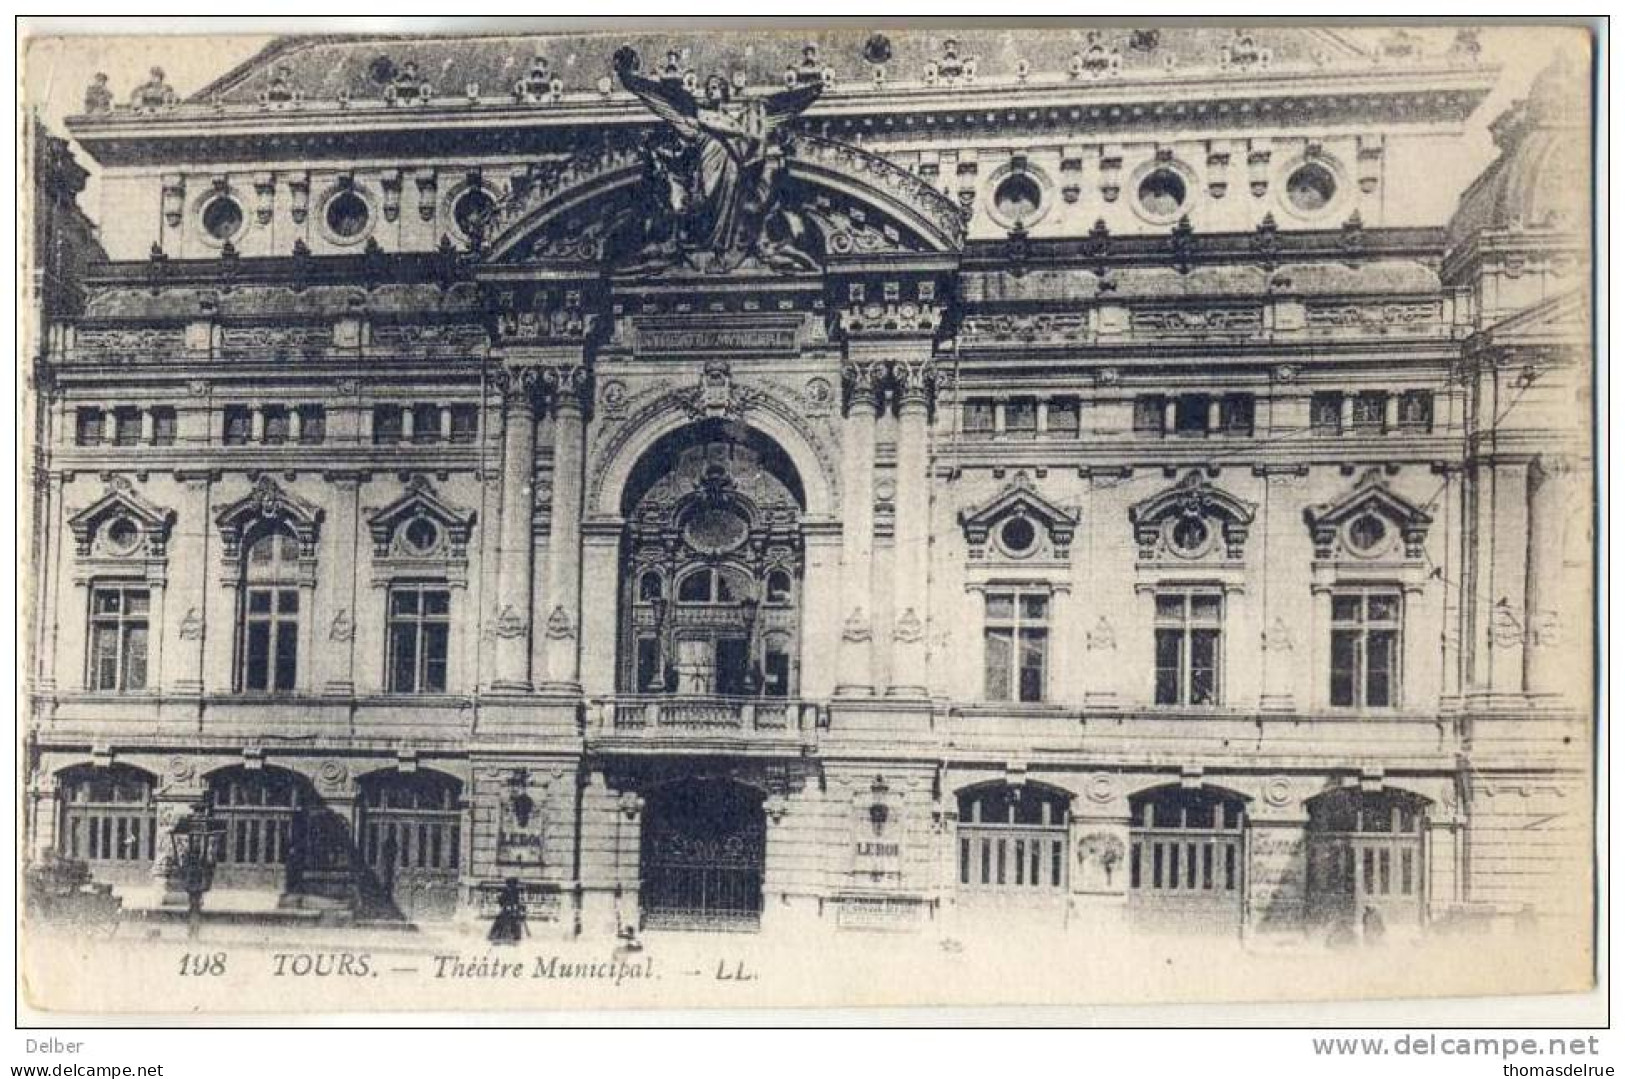 _G985: Carte Postale: 198- TOURS Théâtre Muncipal: 15c Semeuse: - AK: ROUSBRUGGE-HARINGHE 16 XI.1917 - Zona No Ocupada